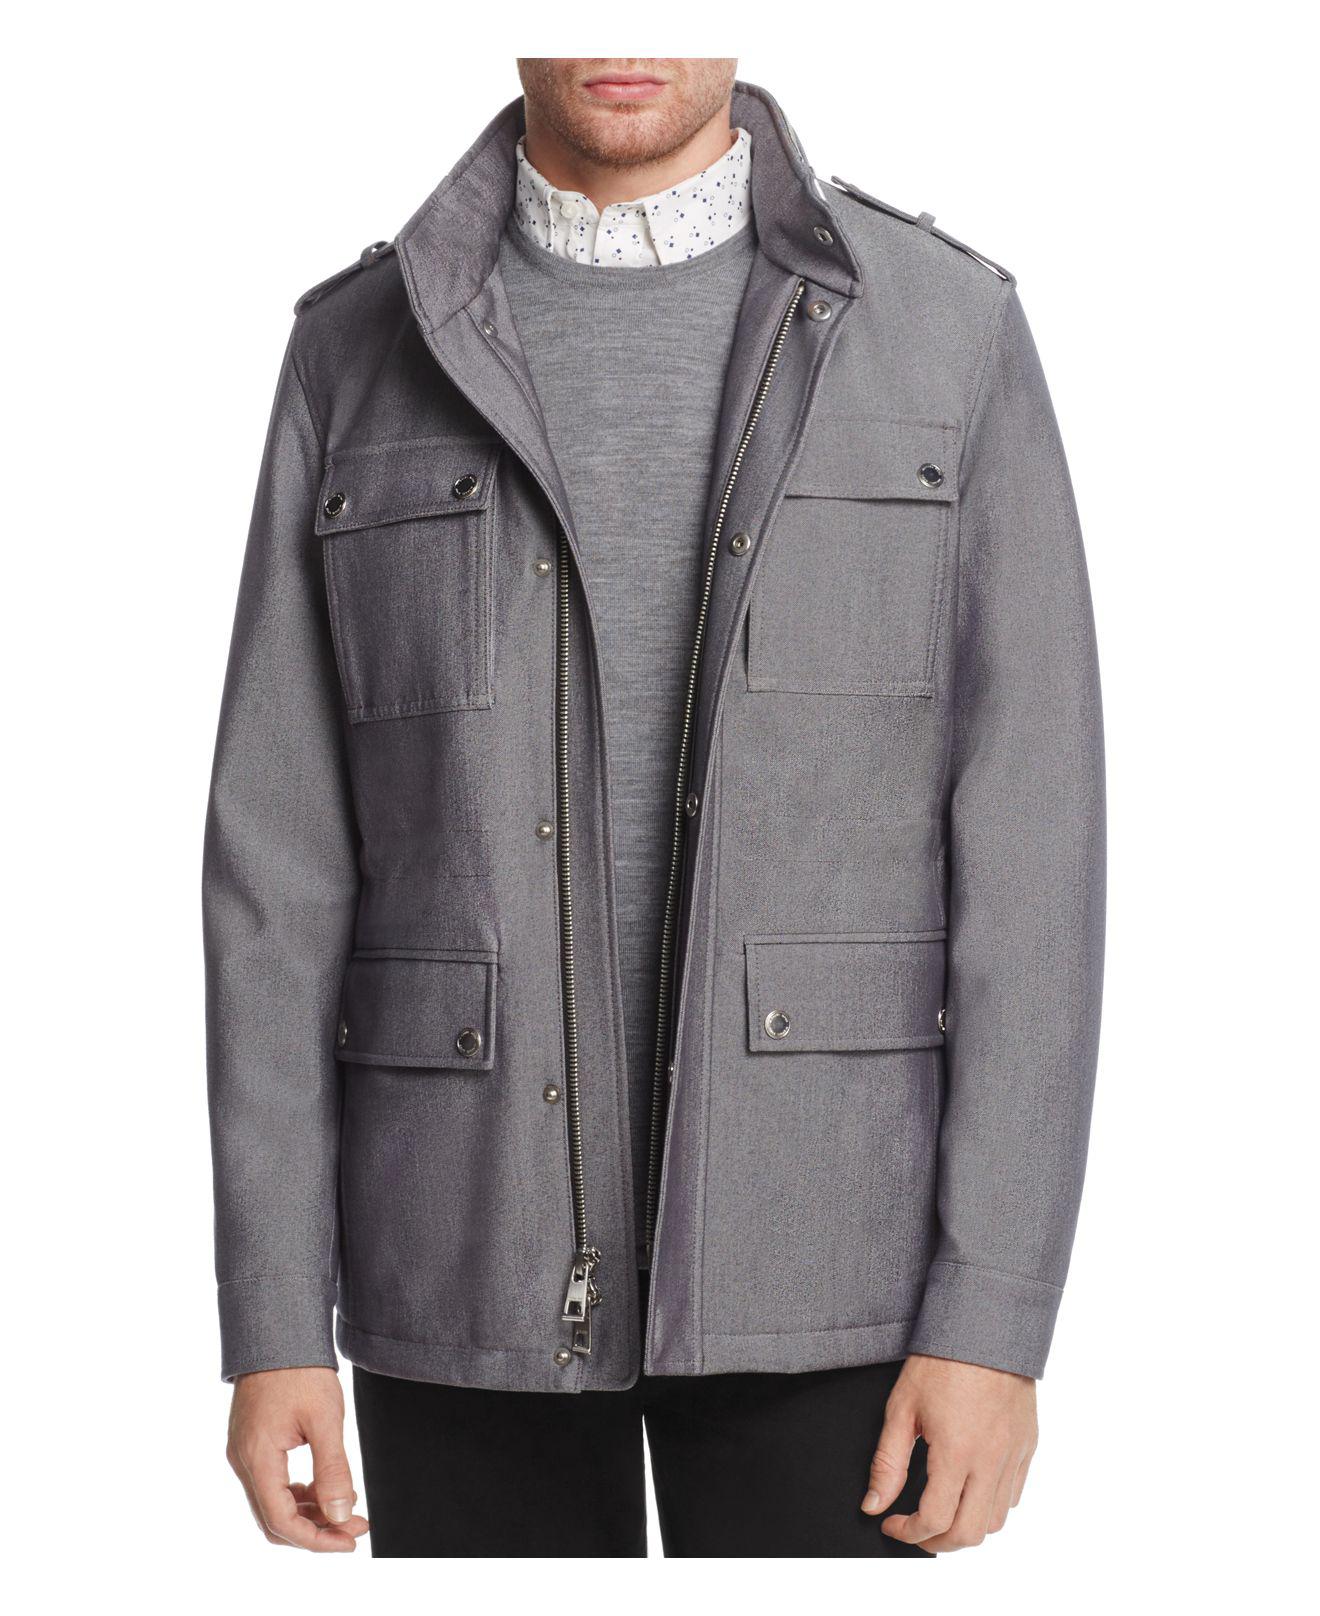 Lyst - Michael Kors Stretch Field Jacket in Gray for Men